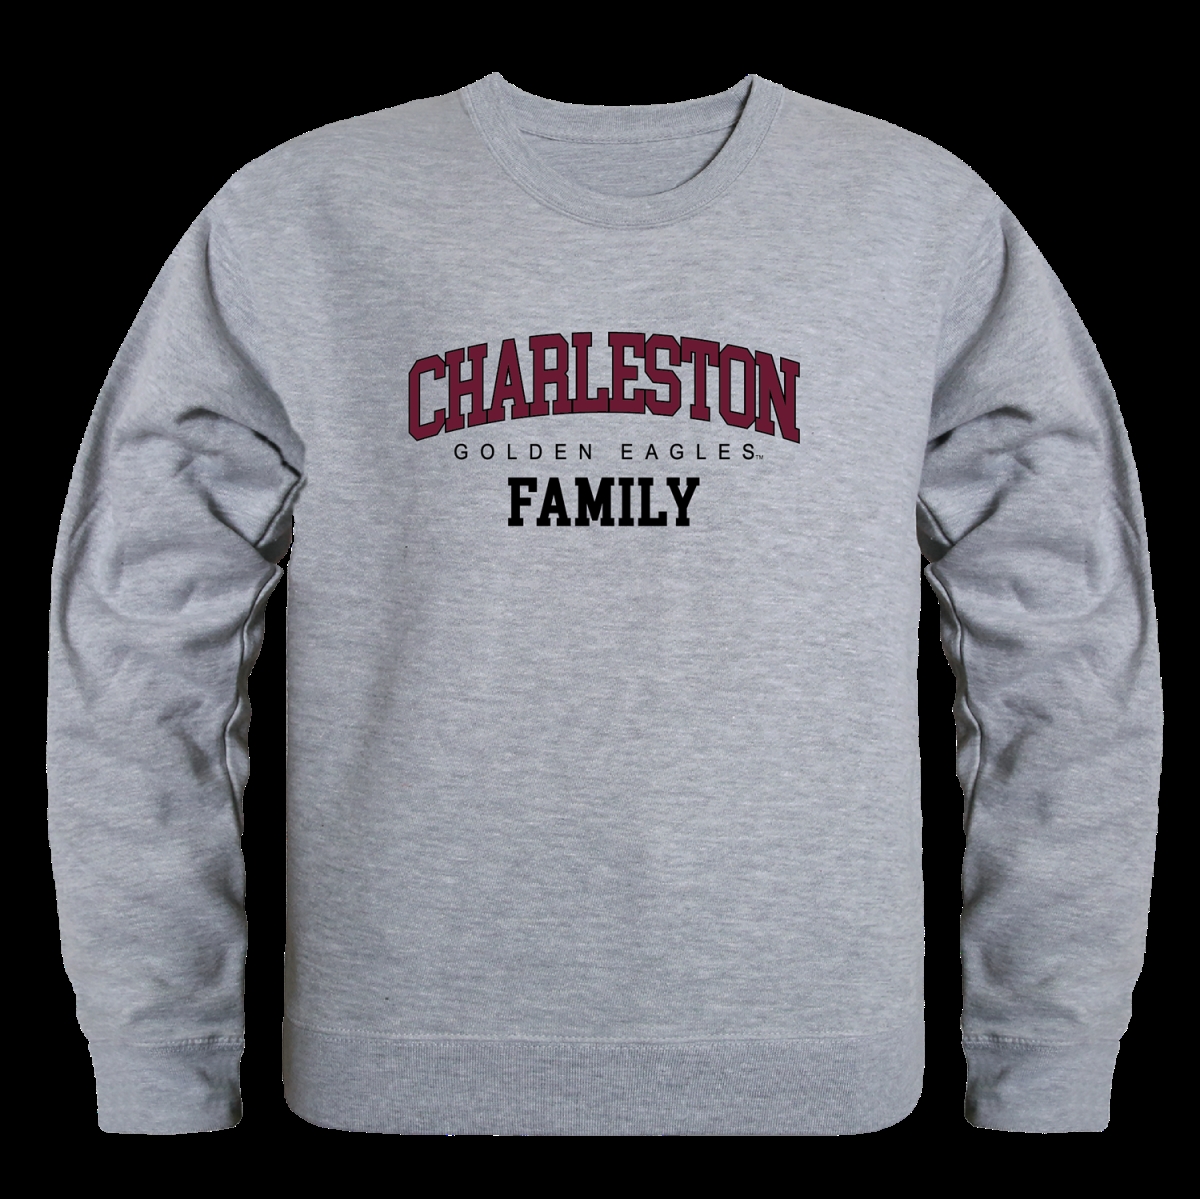 W Republic 572-630-HGY-02 College of Charleston Golden Eagles Family Crewneck Sweatshirt&#44; Heather Grey - Medium